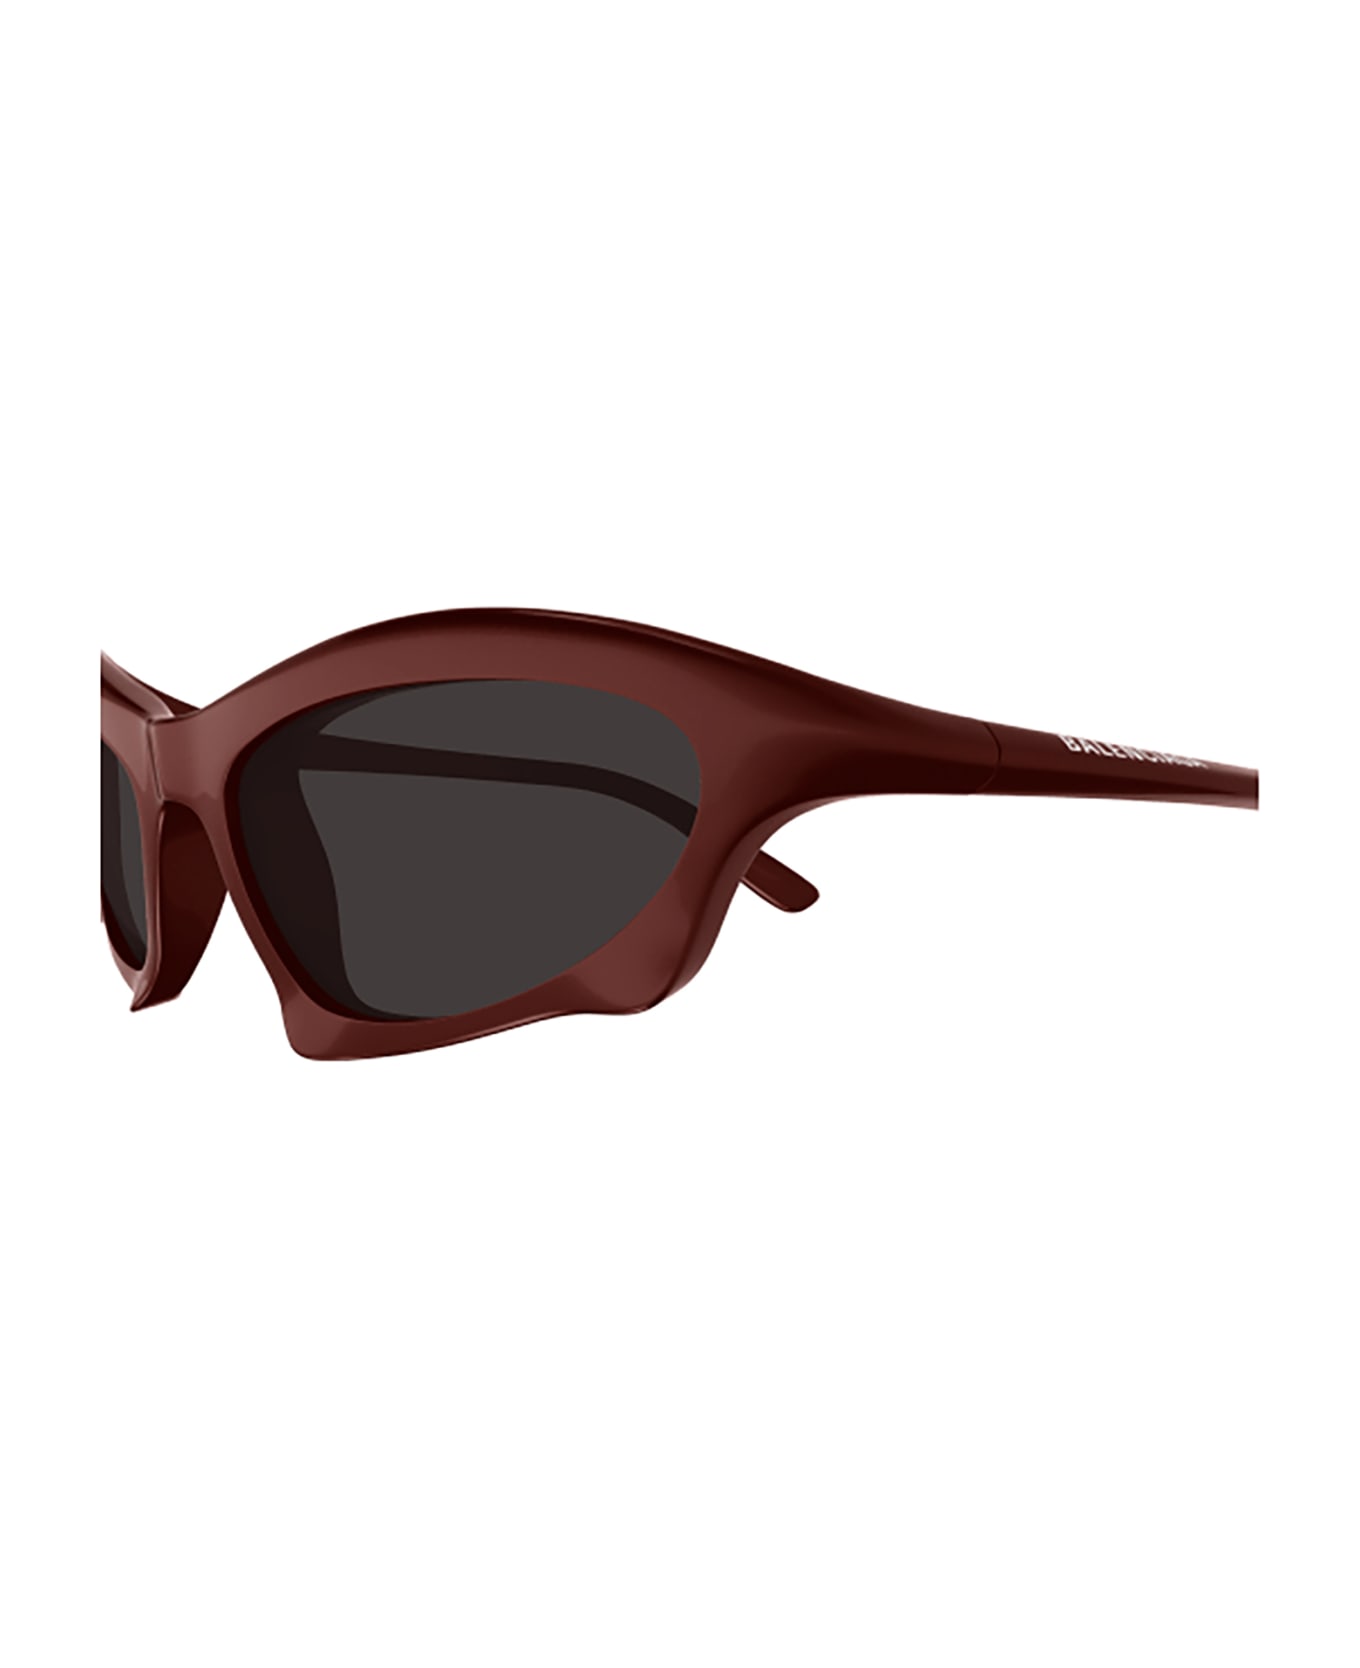 Balenciaga Eyewear BB0229S Sunglasses - Burgundy Burgundy Gre